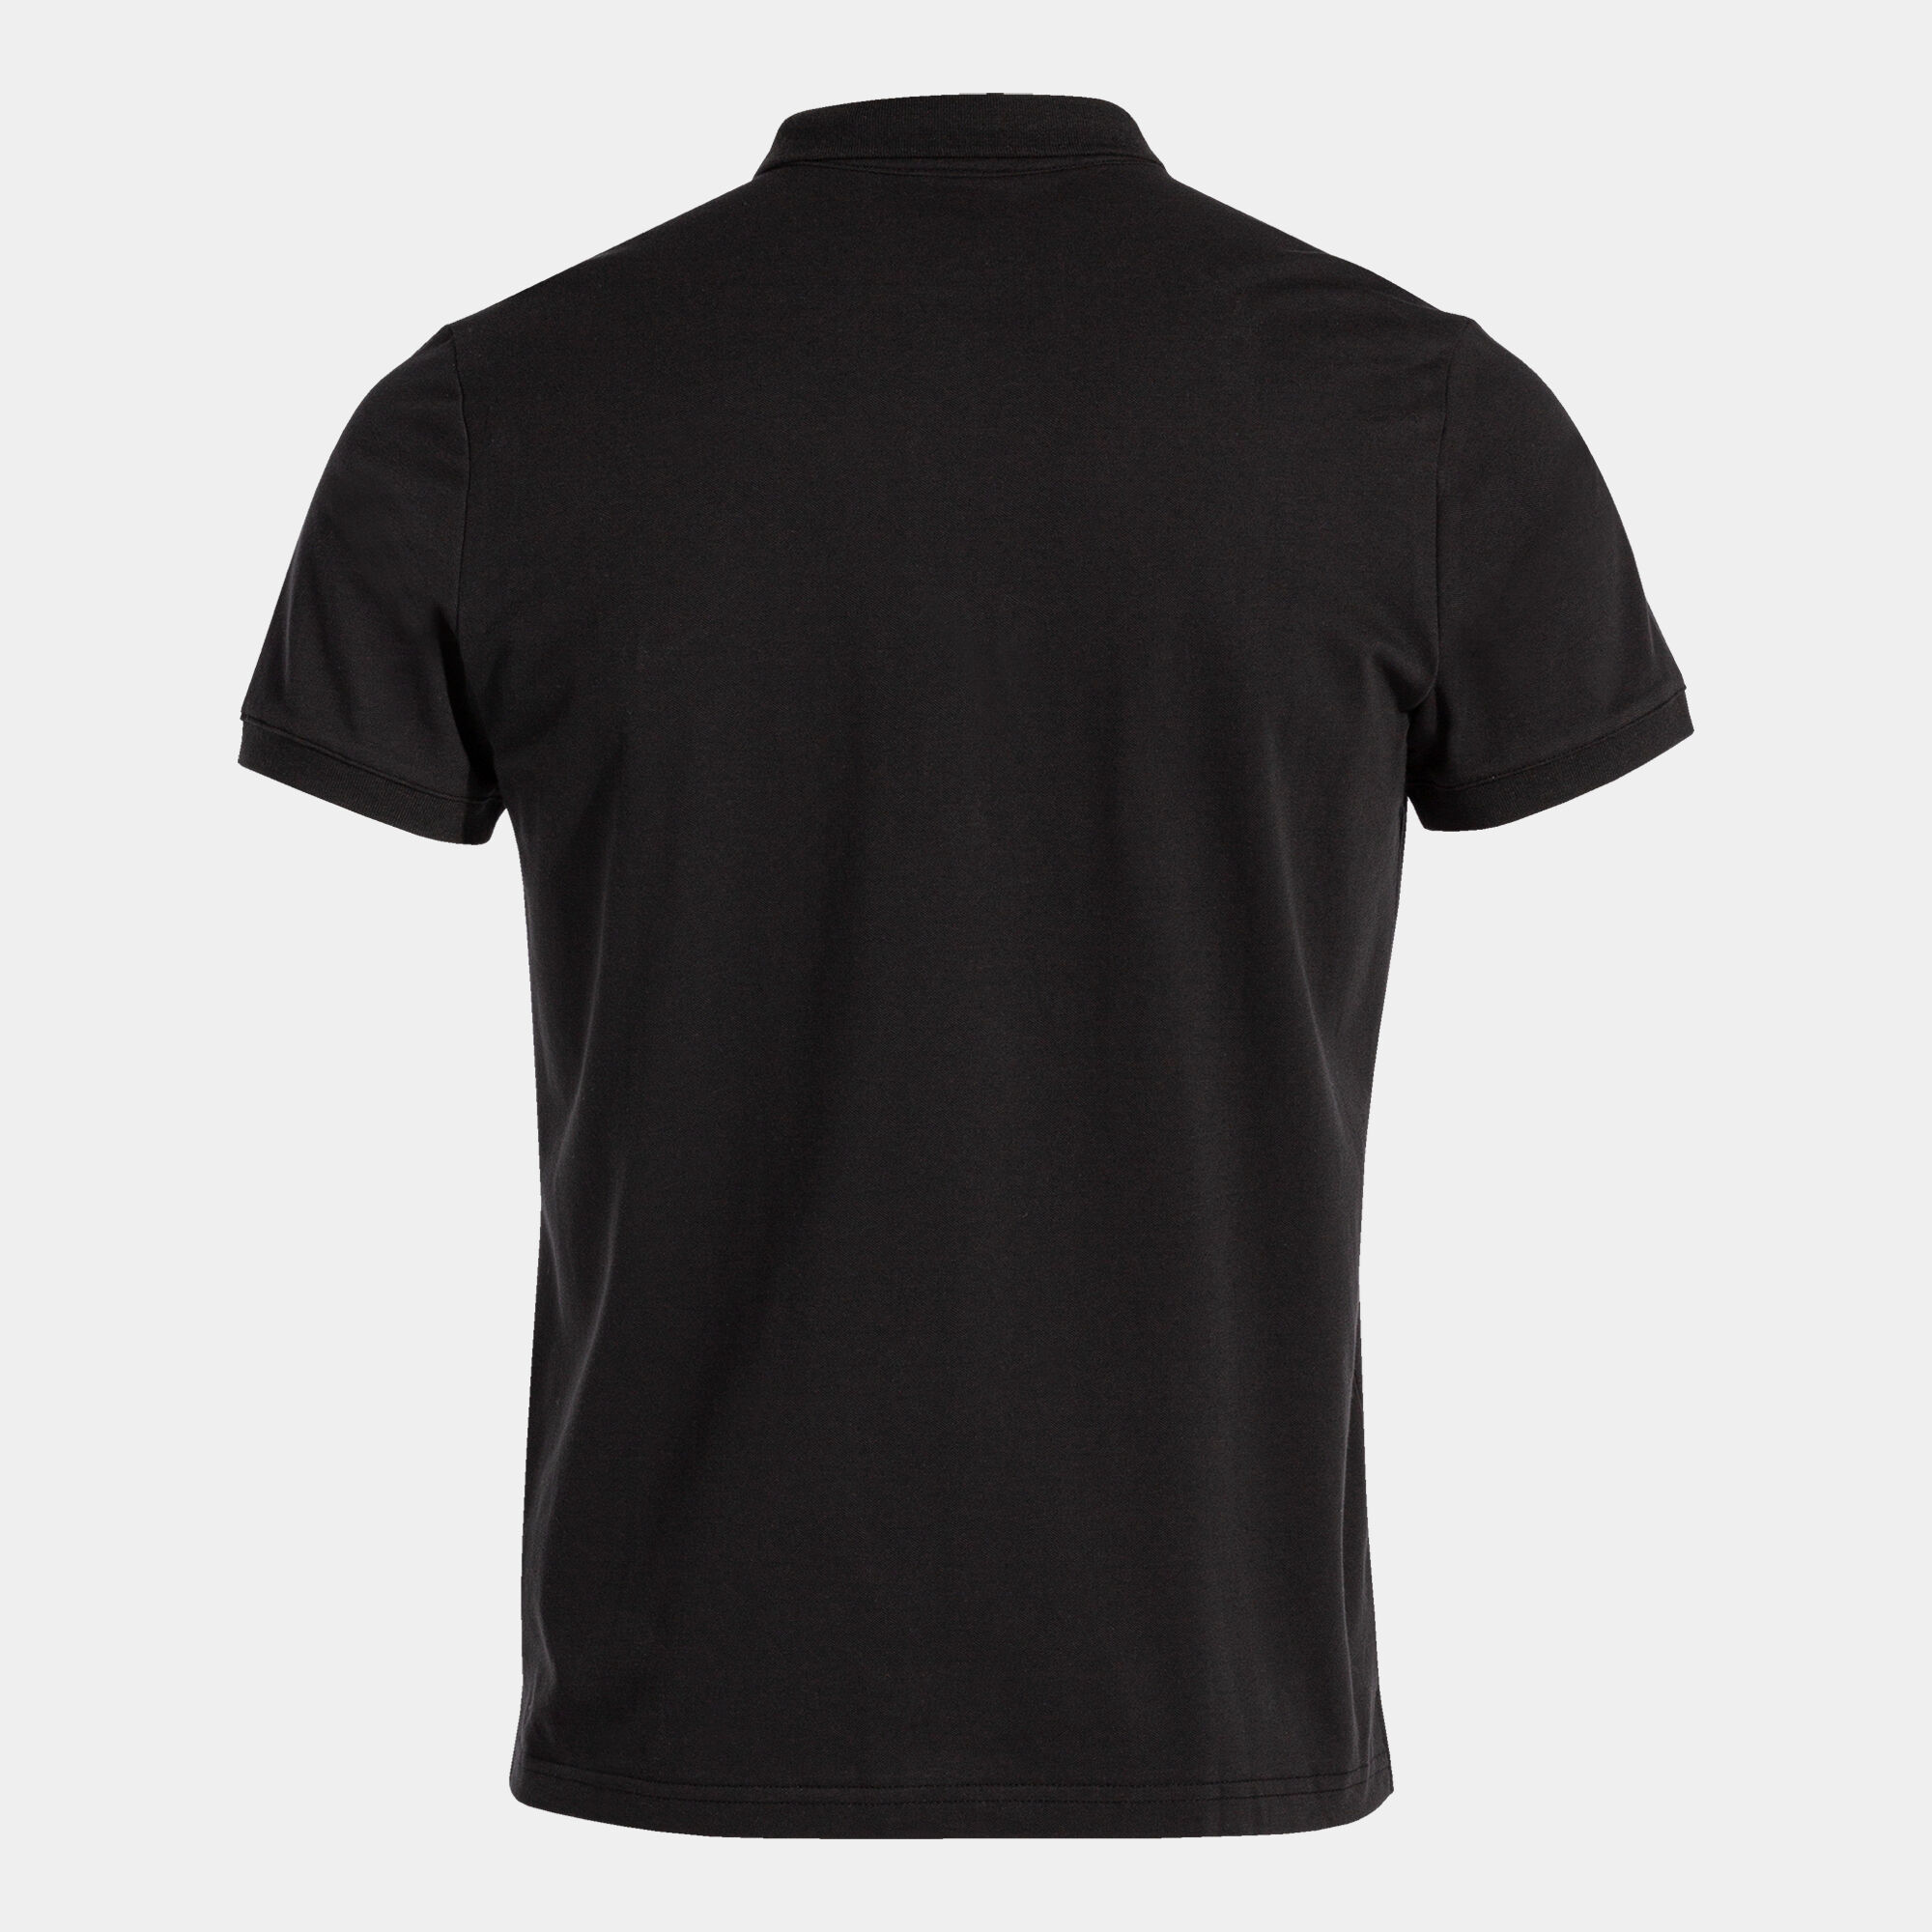 Polo shirt short-sleeve man Pasarela III black